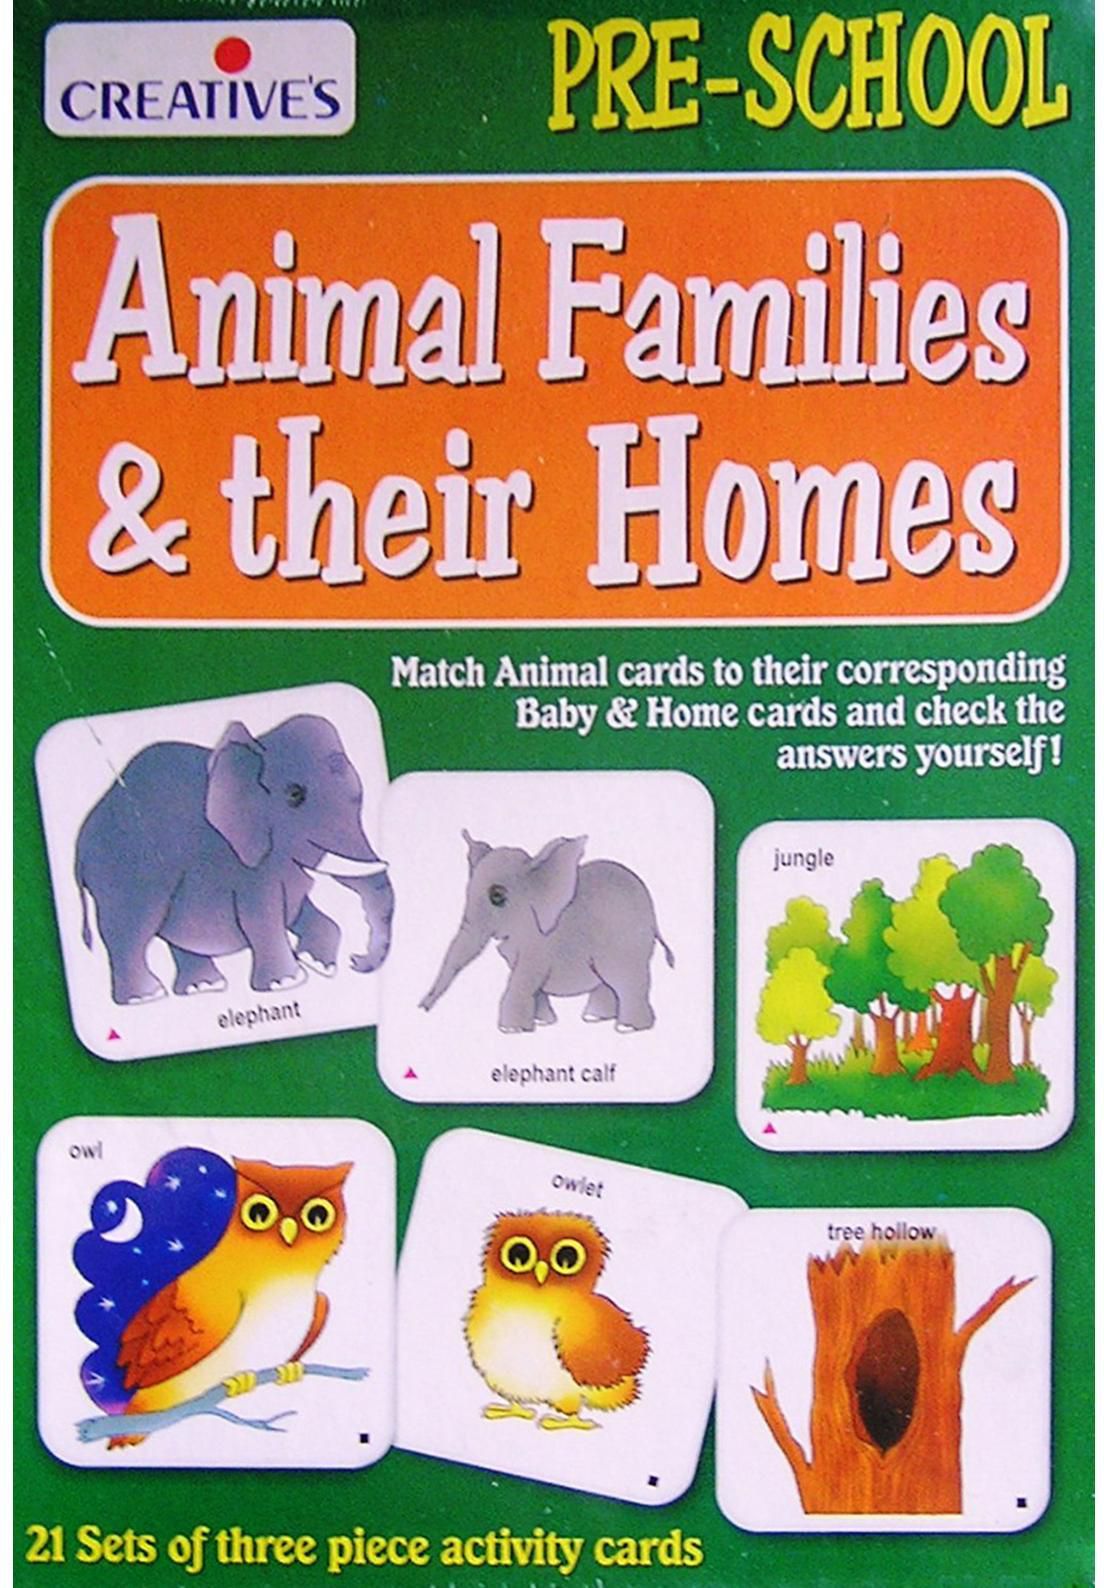 Creatives Pre-School Animal Families & Their Homes Educational Activity Set